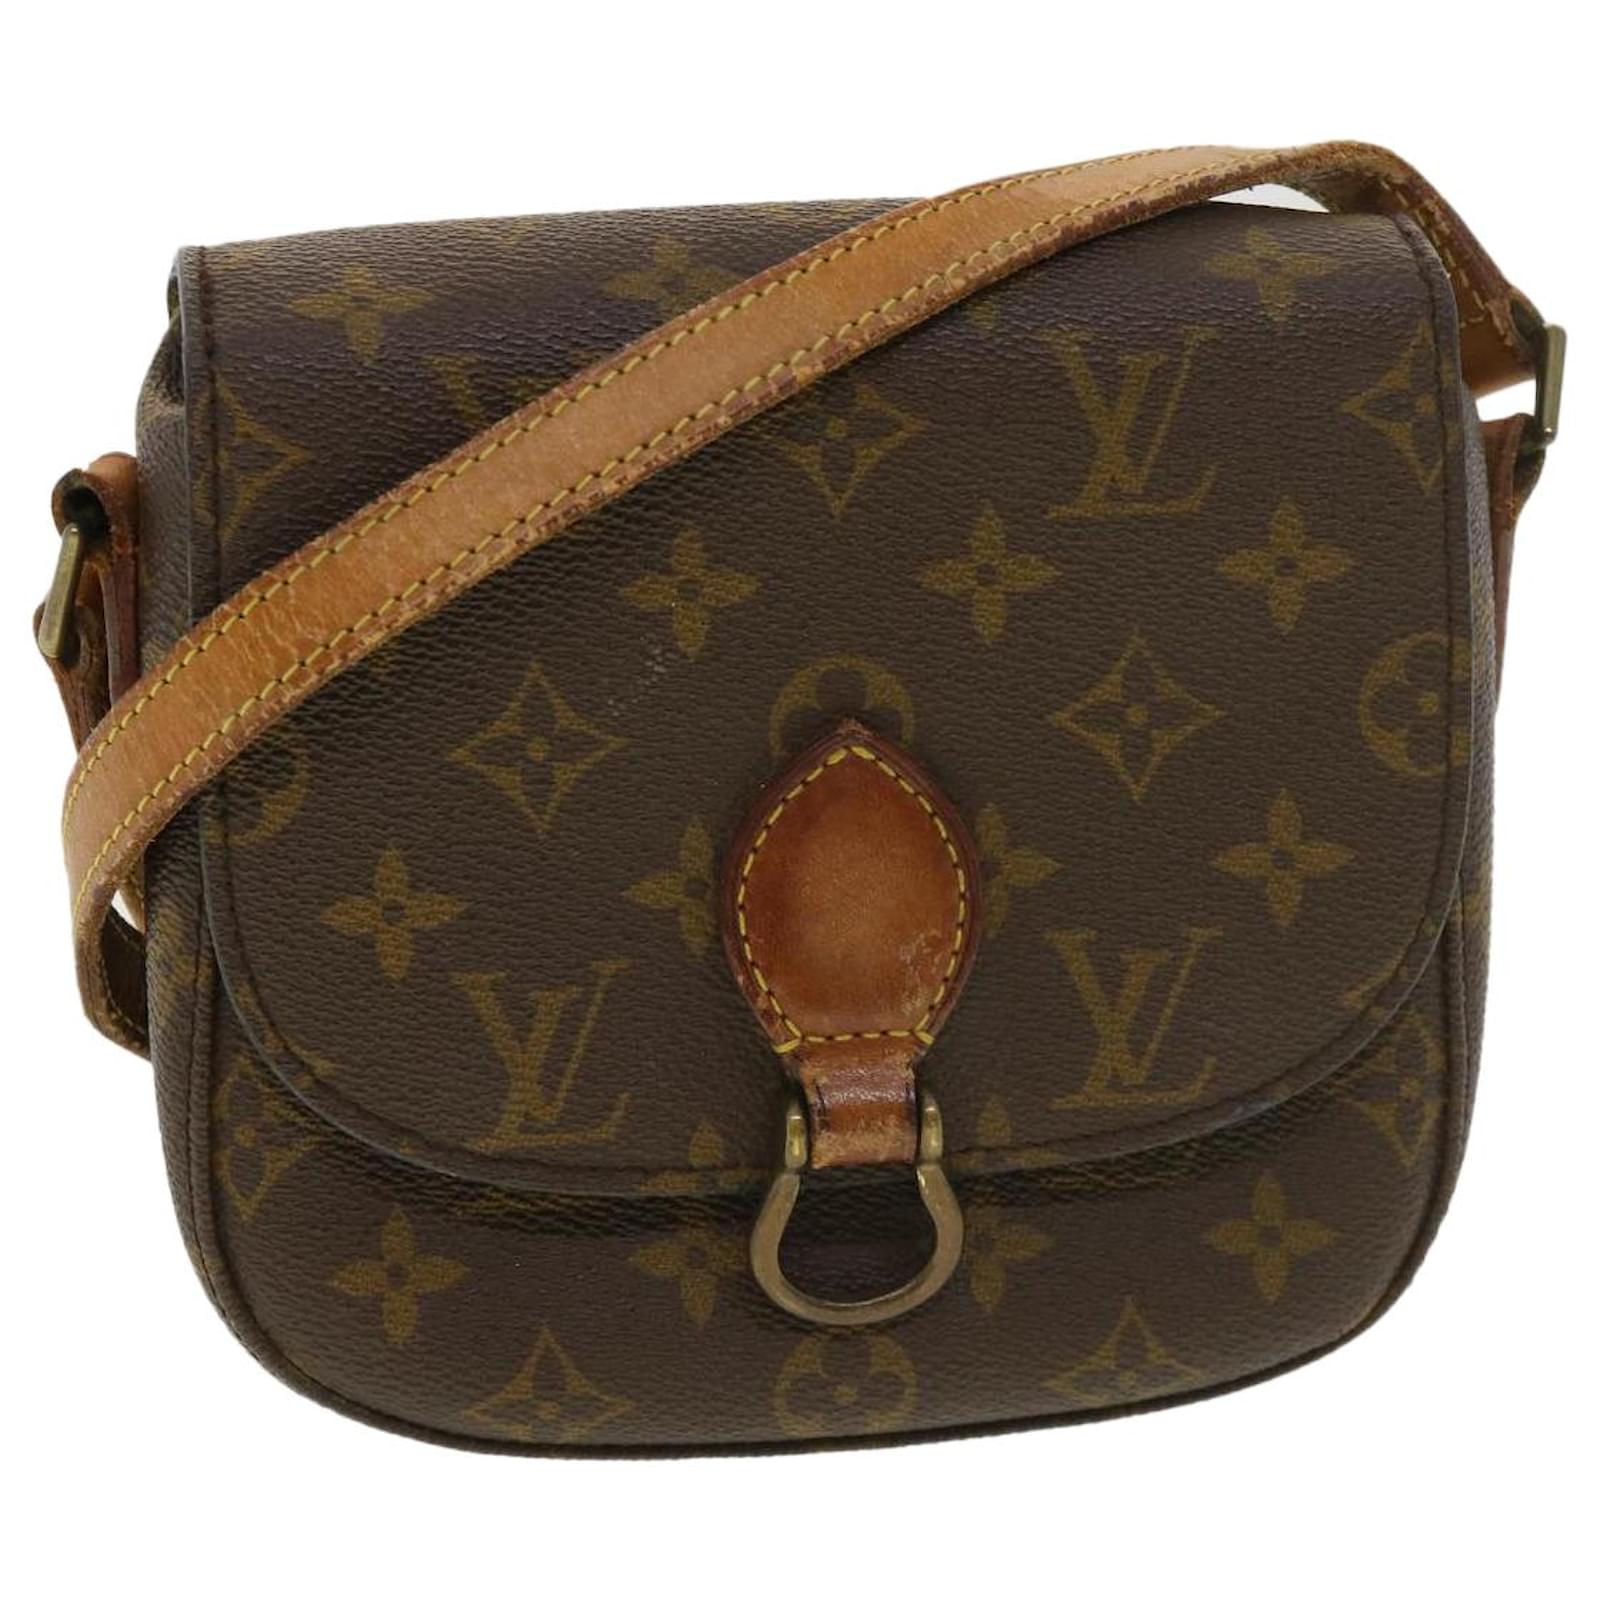 Louis Vuitton -Speedy 40 Monogram Canvas Satchel / Top Handle Bag